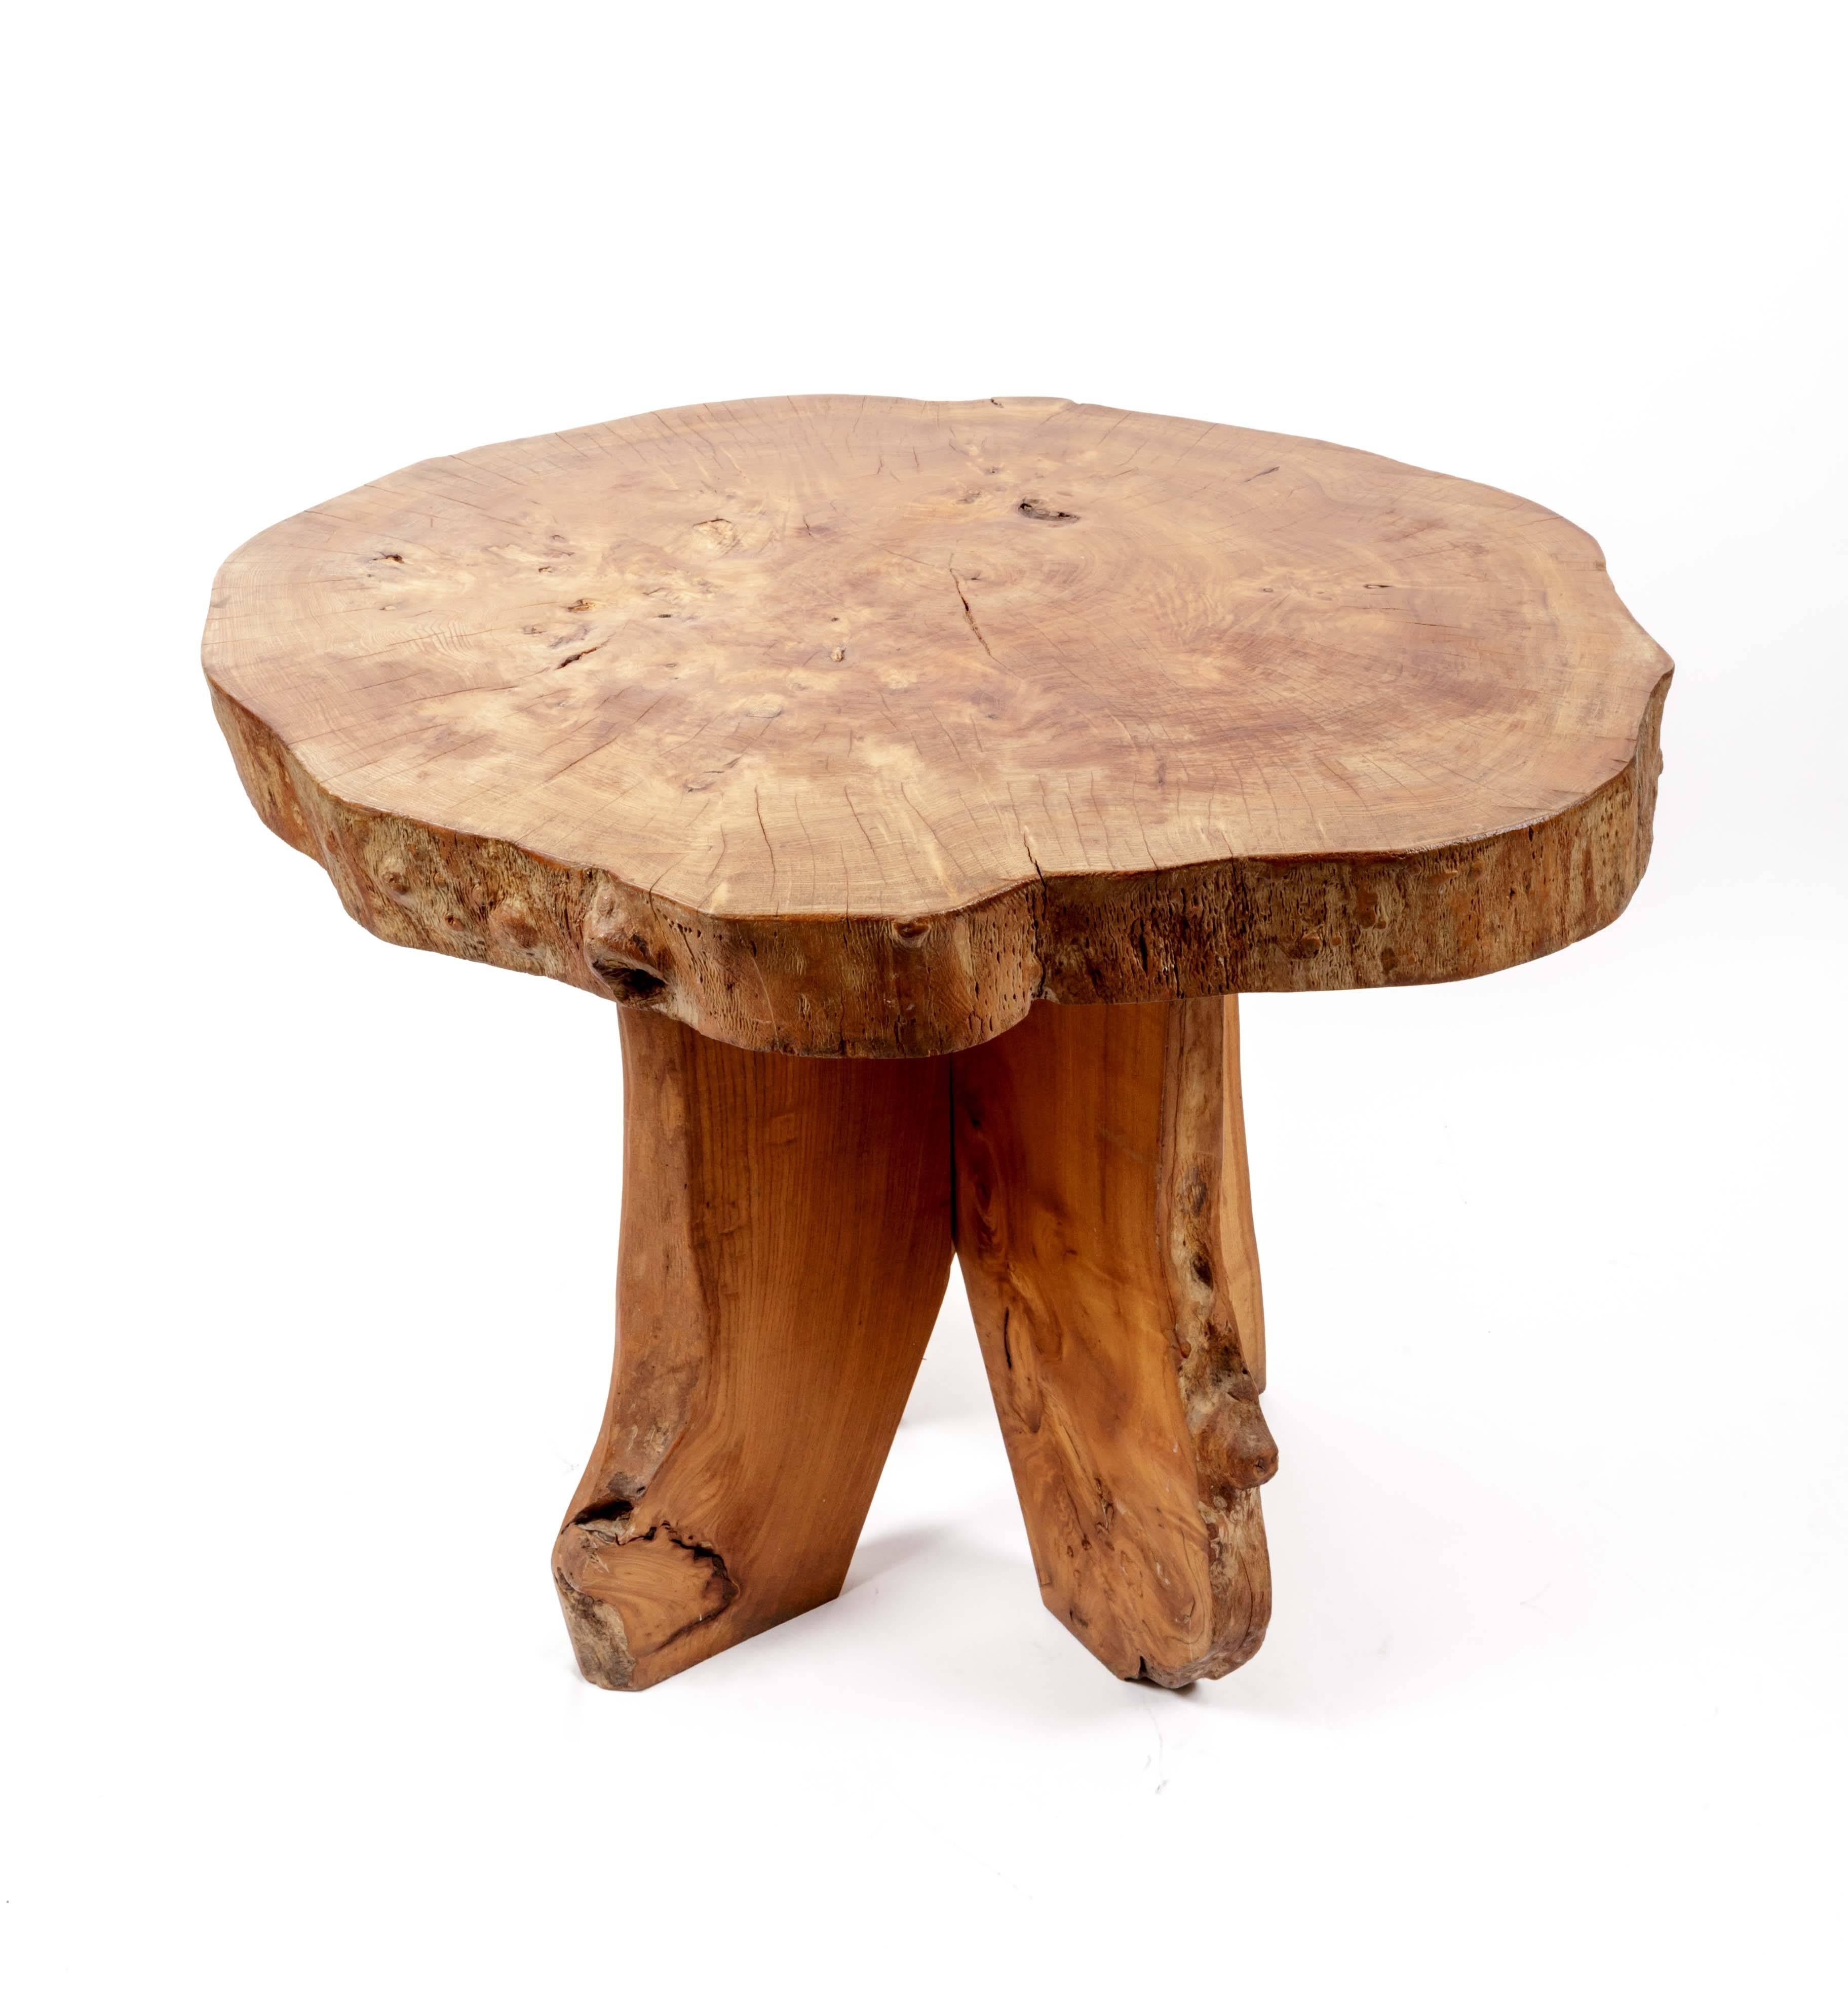 Wooden table, live edges.